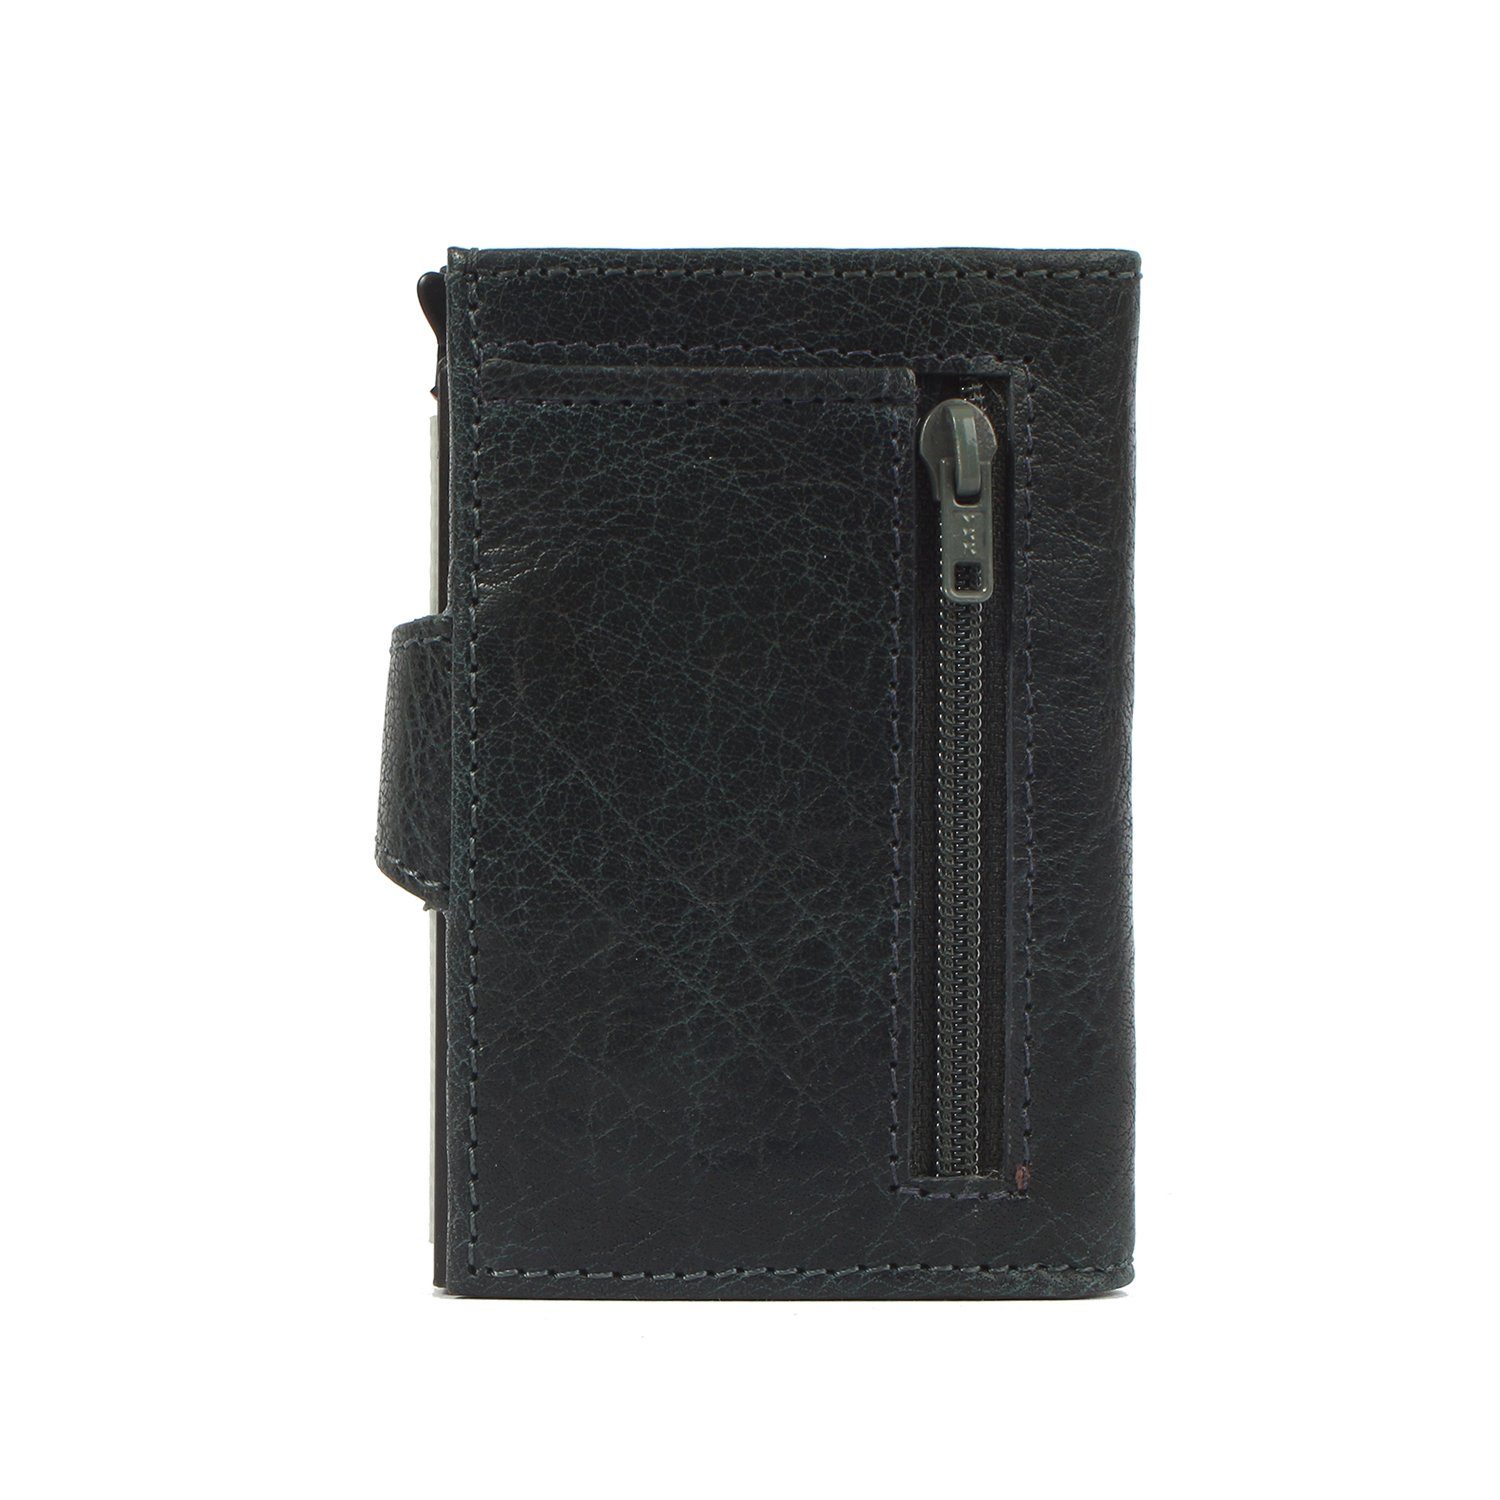 Margelisch Mini Geldbörse noonyu Kreditkartenbörse Leder steelblue Upcycling leather, aus single